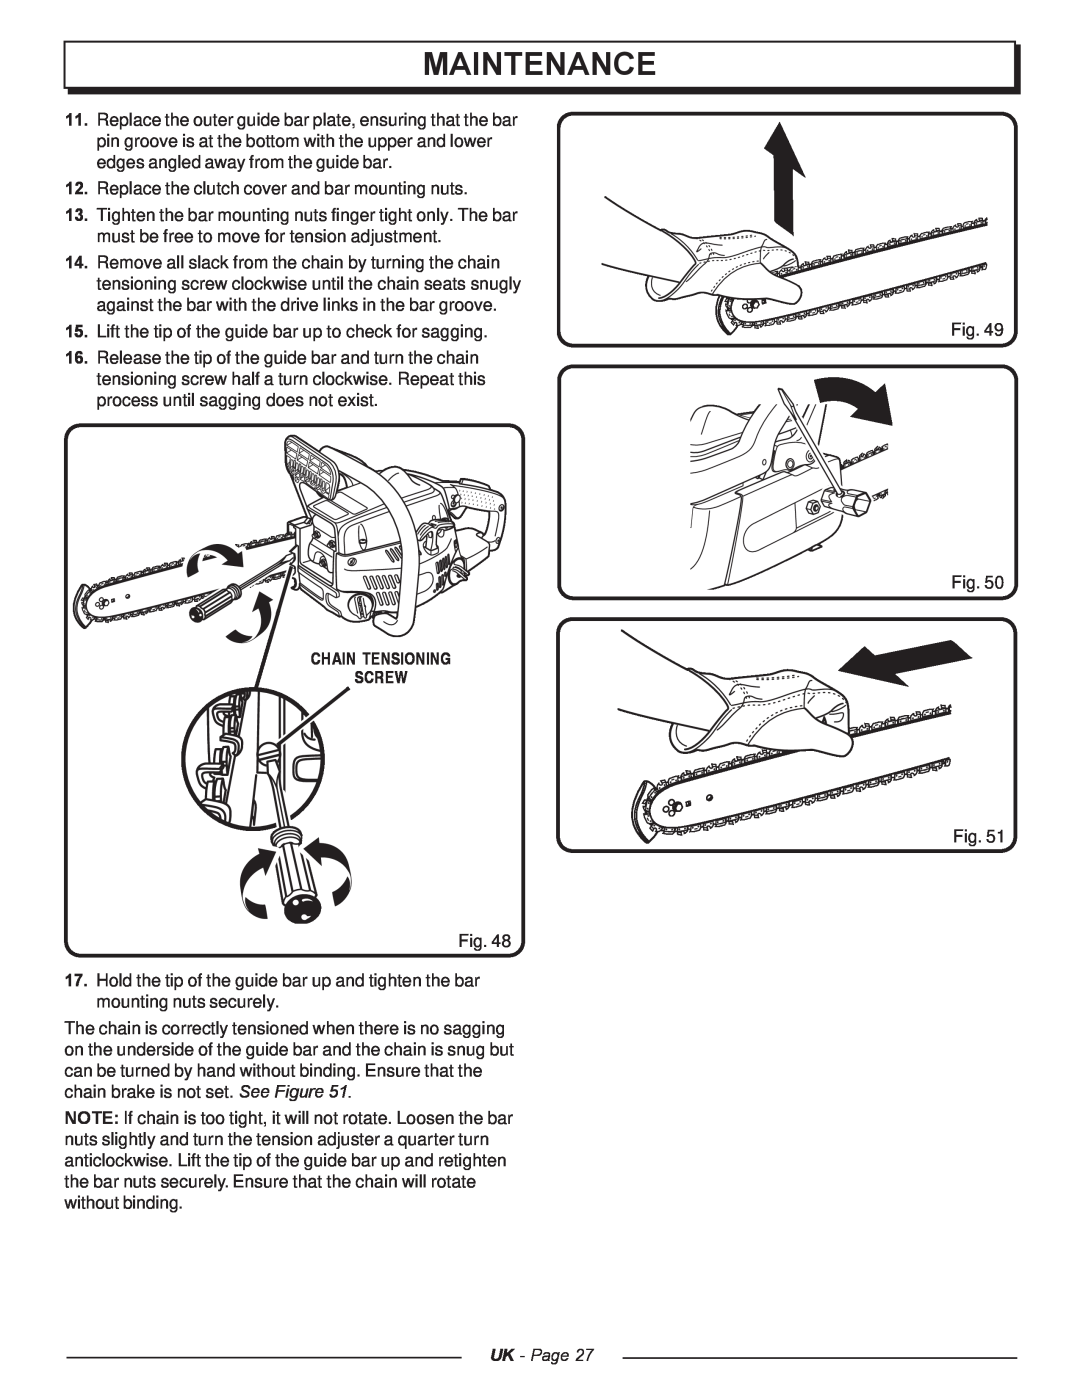 Homelite UT74121A manual Chain Tensioning Screw, Maintenance, UK - Page 